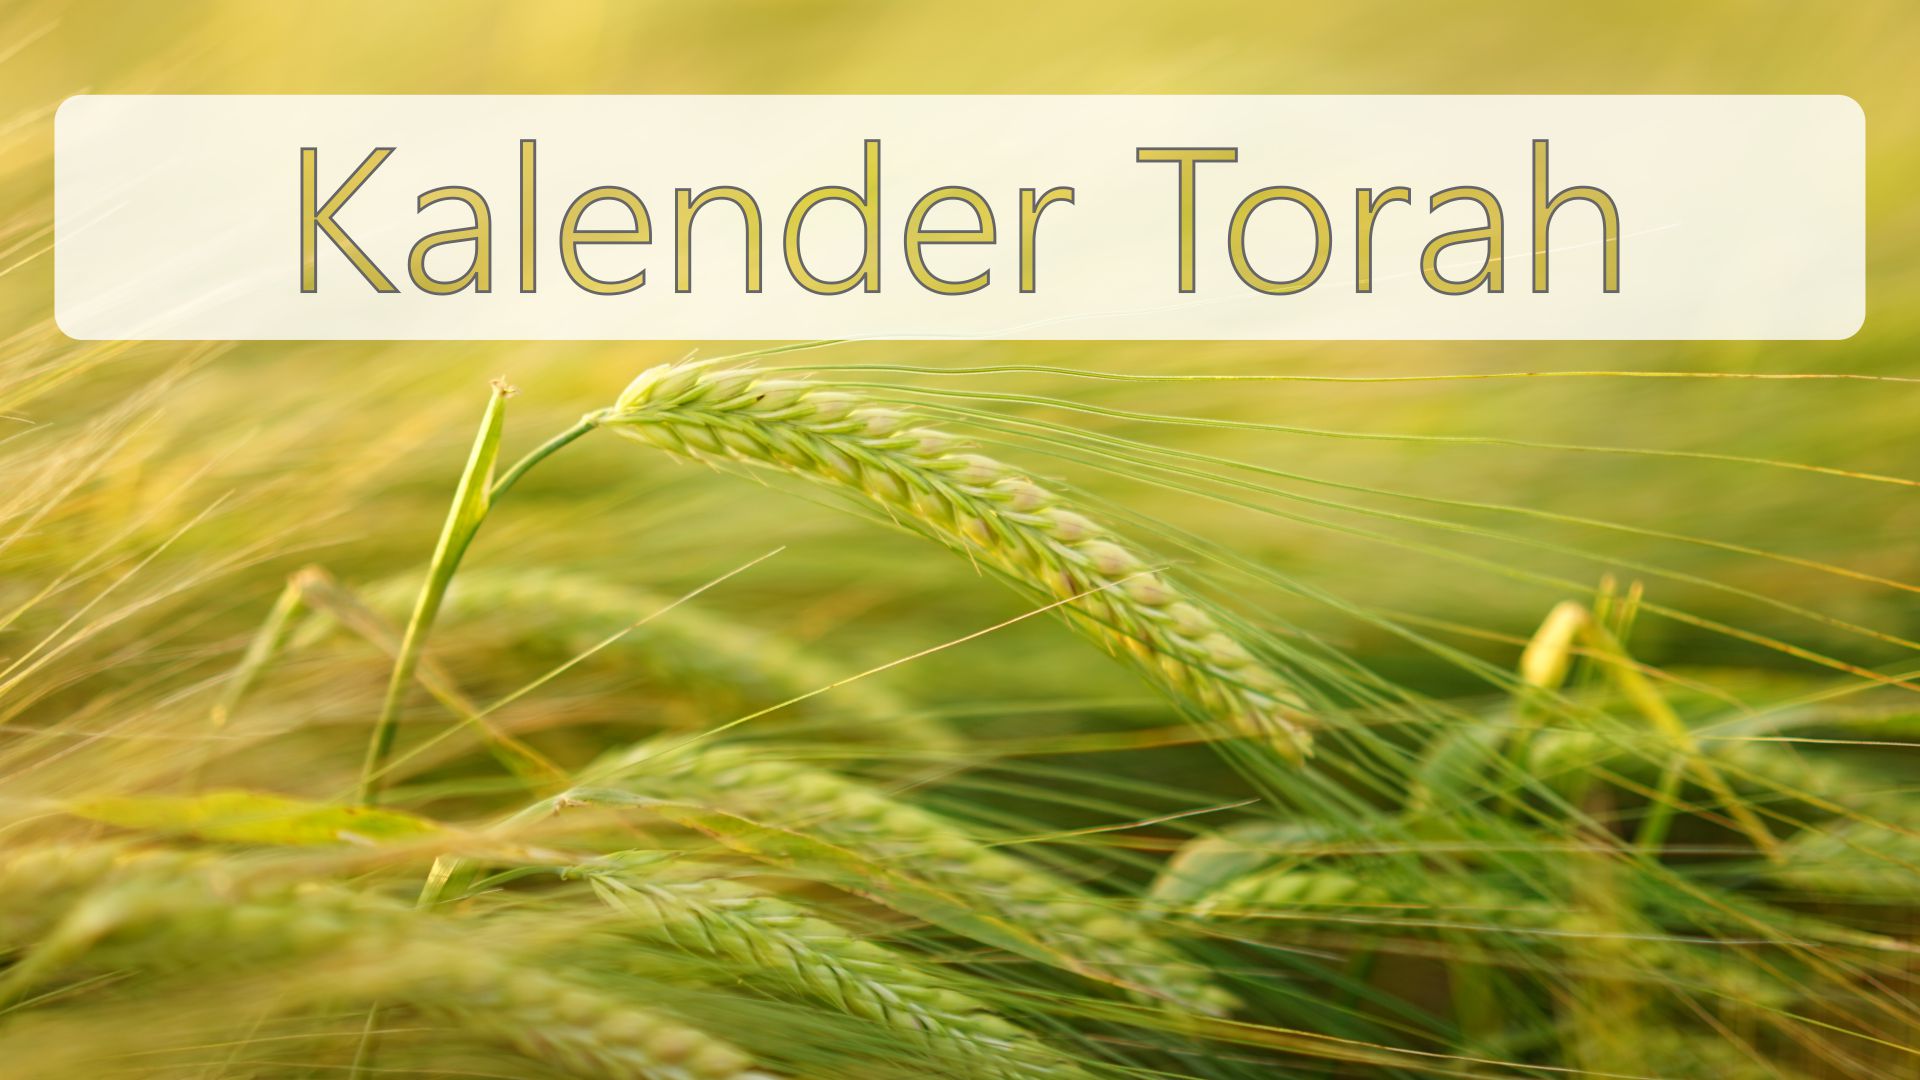 Kalender Torah